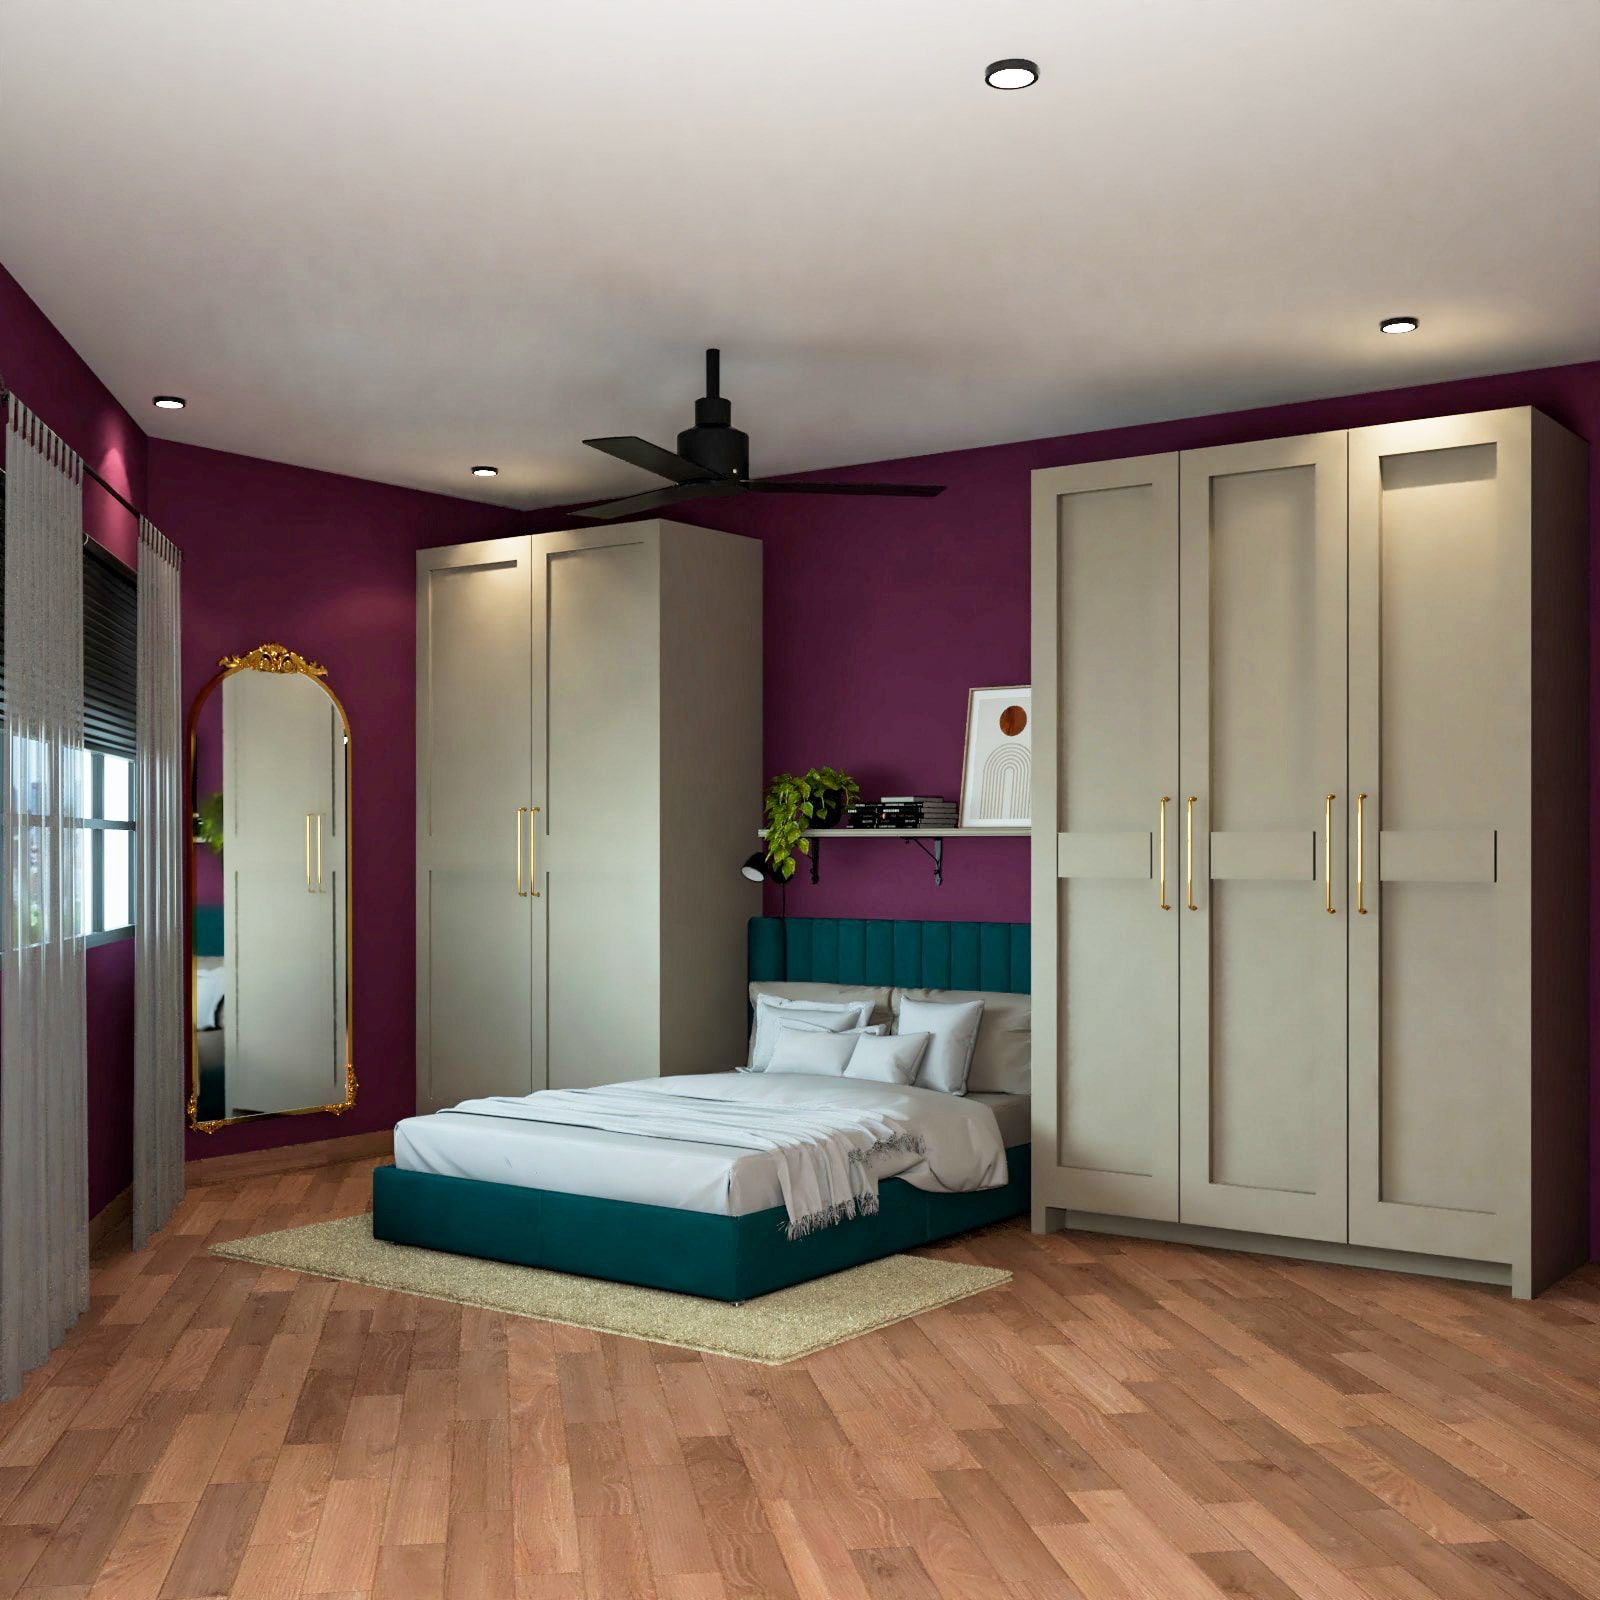 Classic Master Bedroom Design With Light Tones